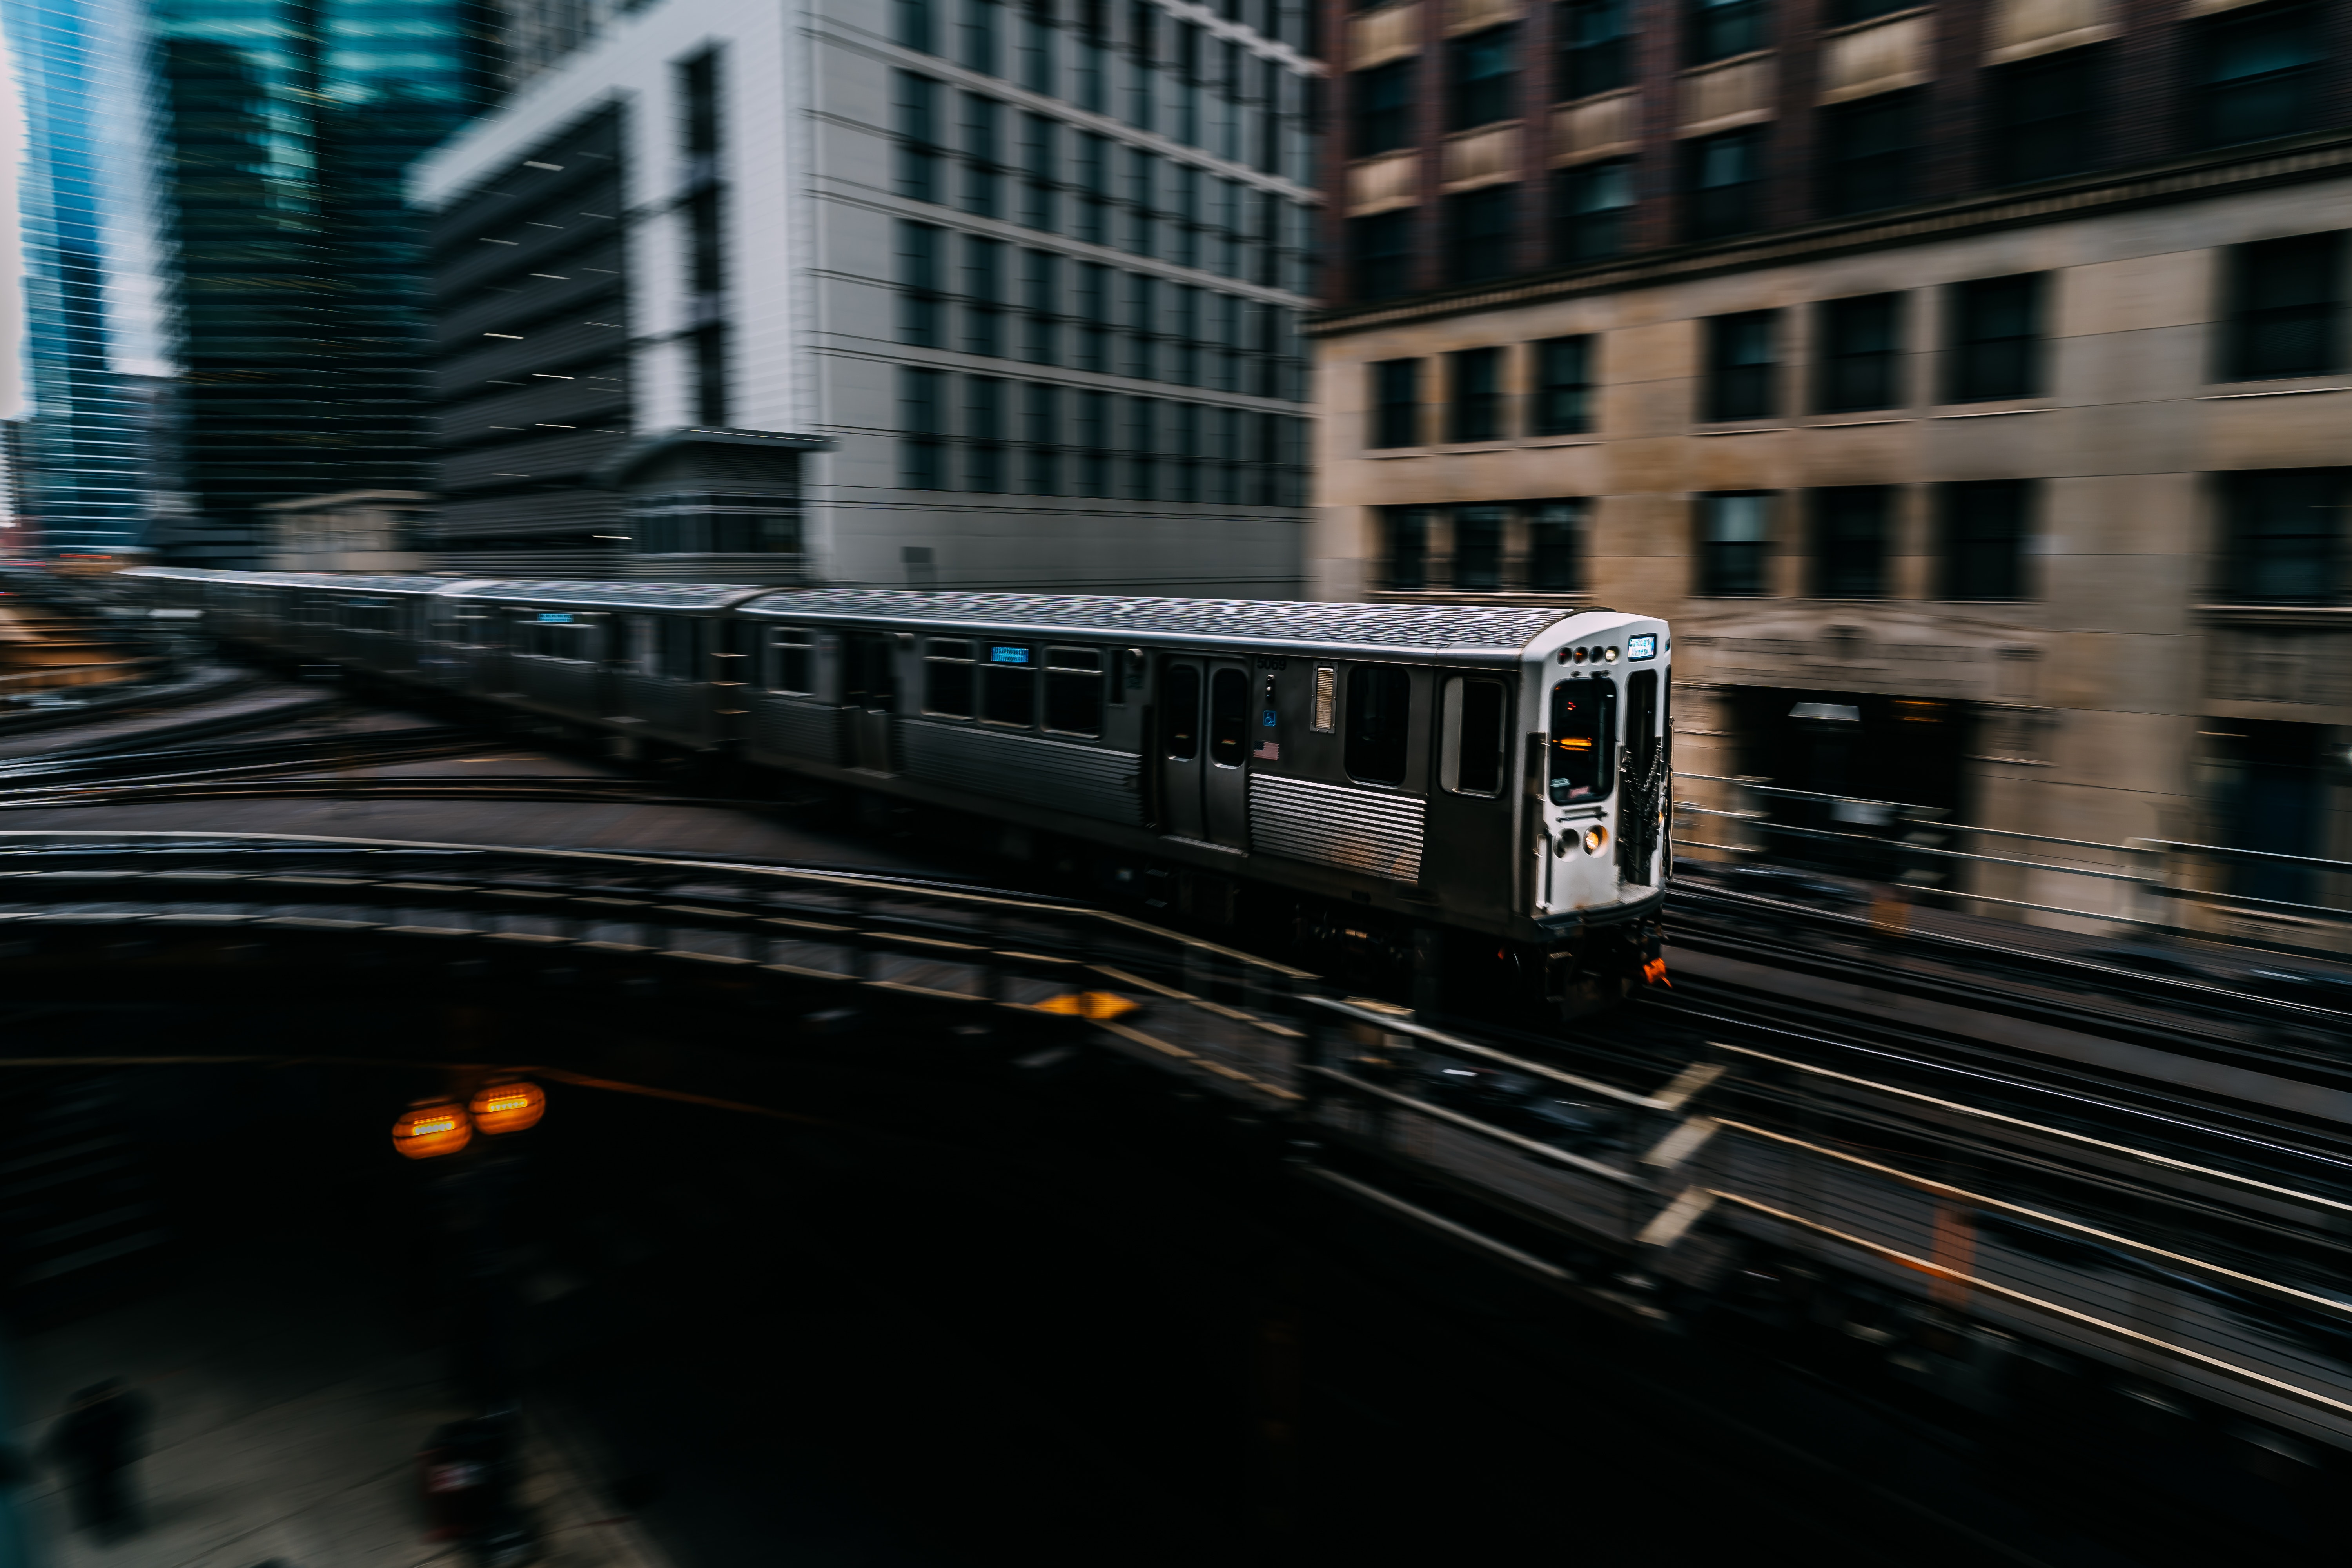 A speeding gray and black train